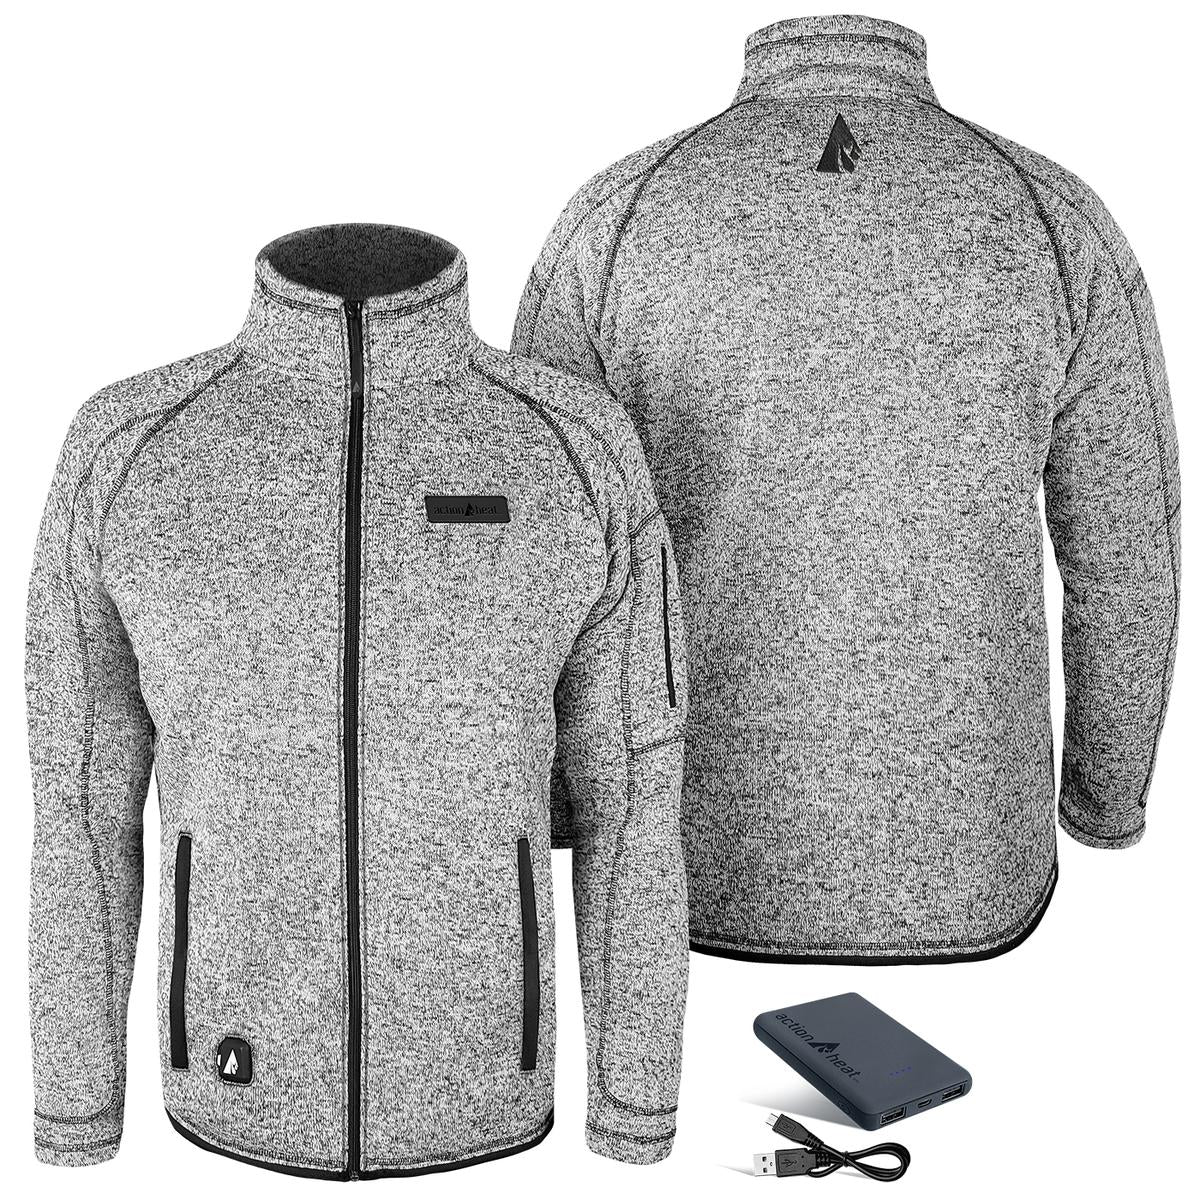 ActionHeat 5V Men's Battery Heated Sweater Jacket - Full Set